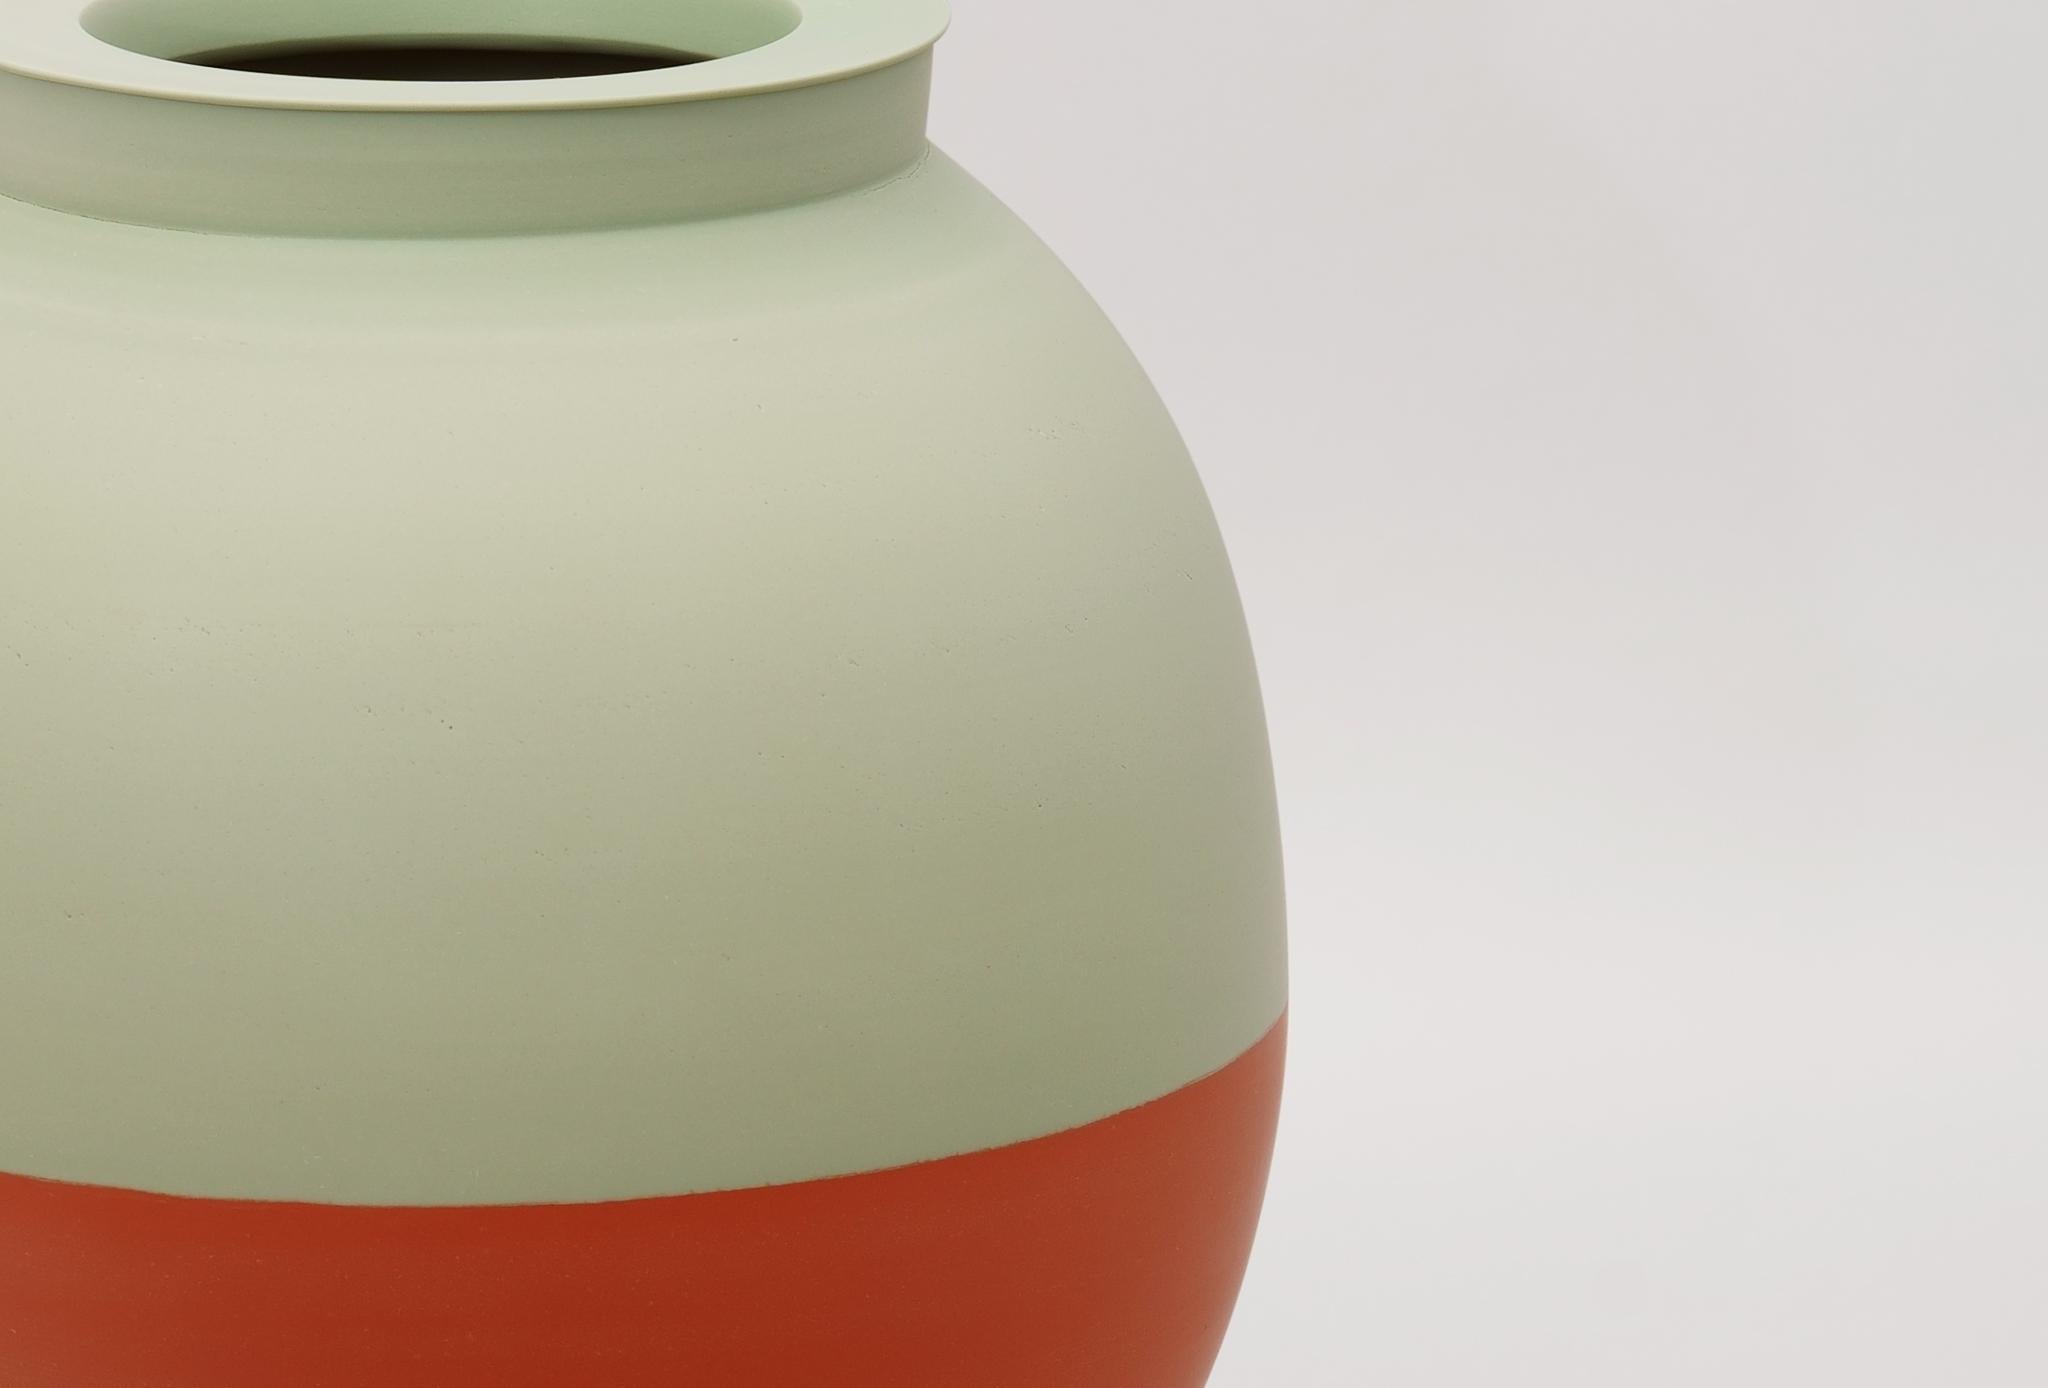 German Half Half Vase by Jung Hong For Sale